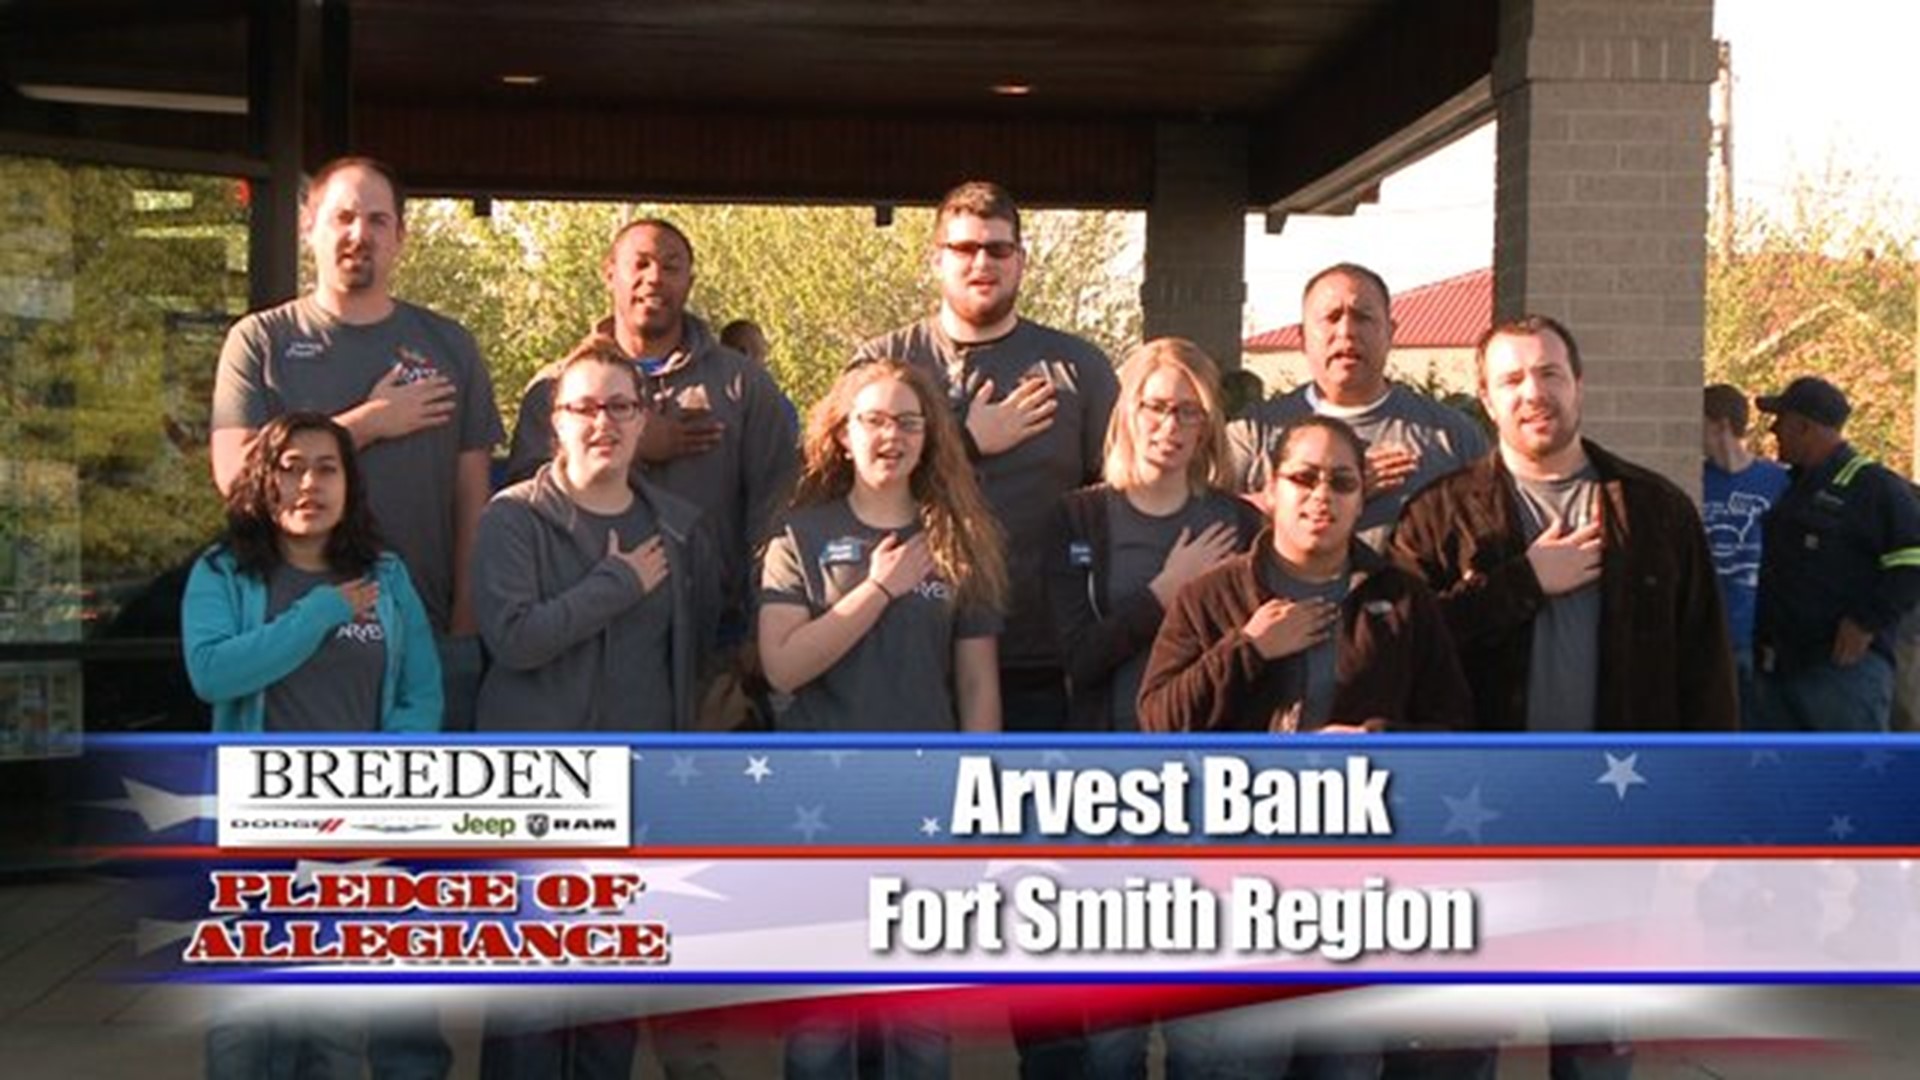 Arvest Bank, Fort Smith Region